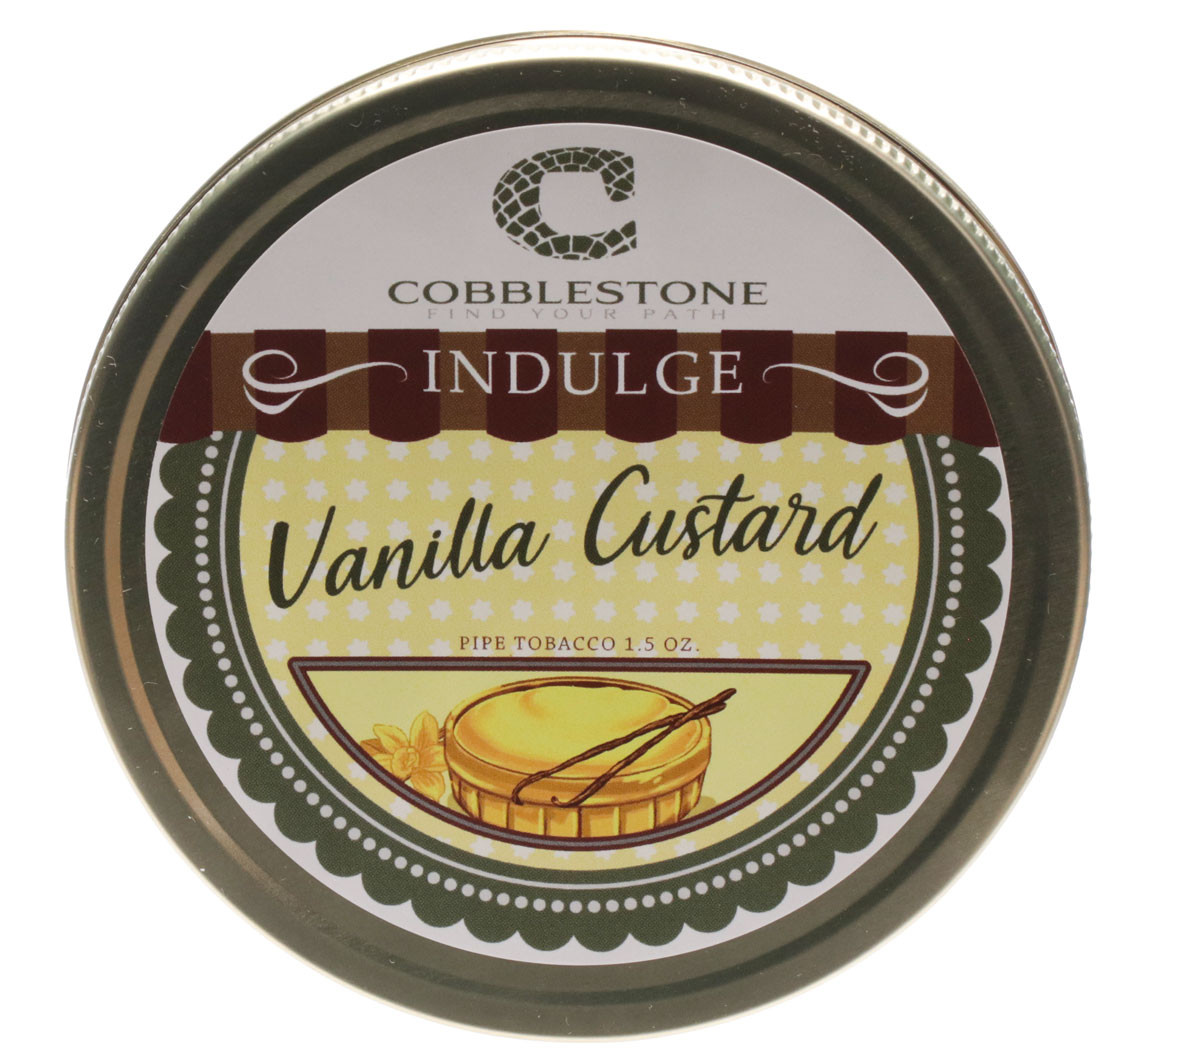 Cobblestone Indulge Vanilla Custard 1.5oz